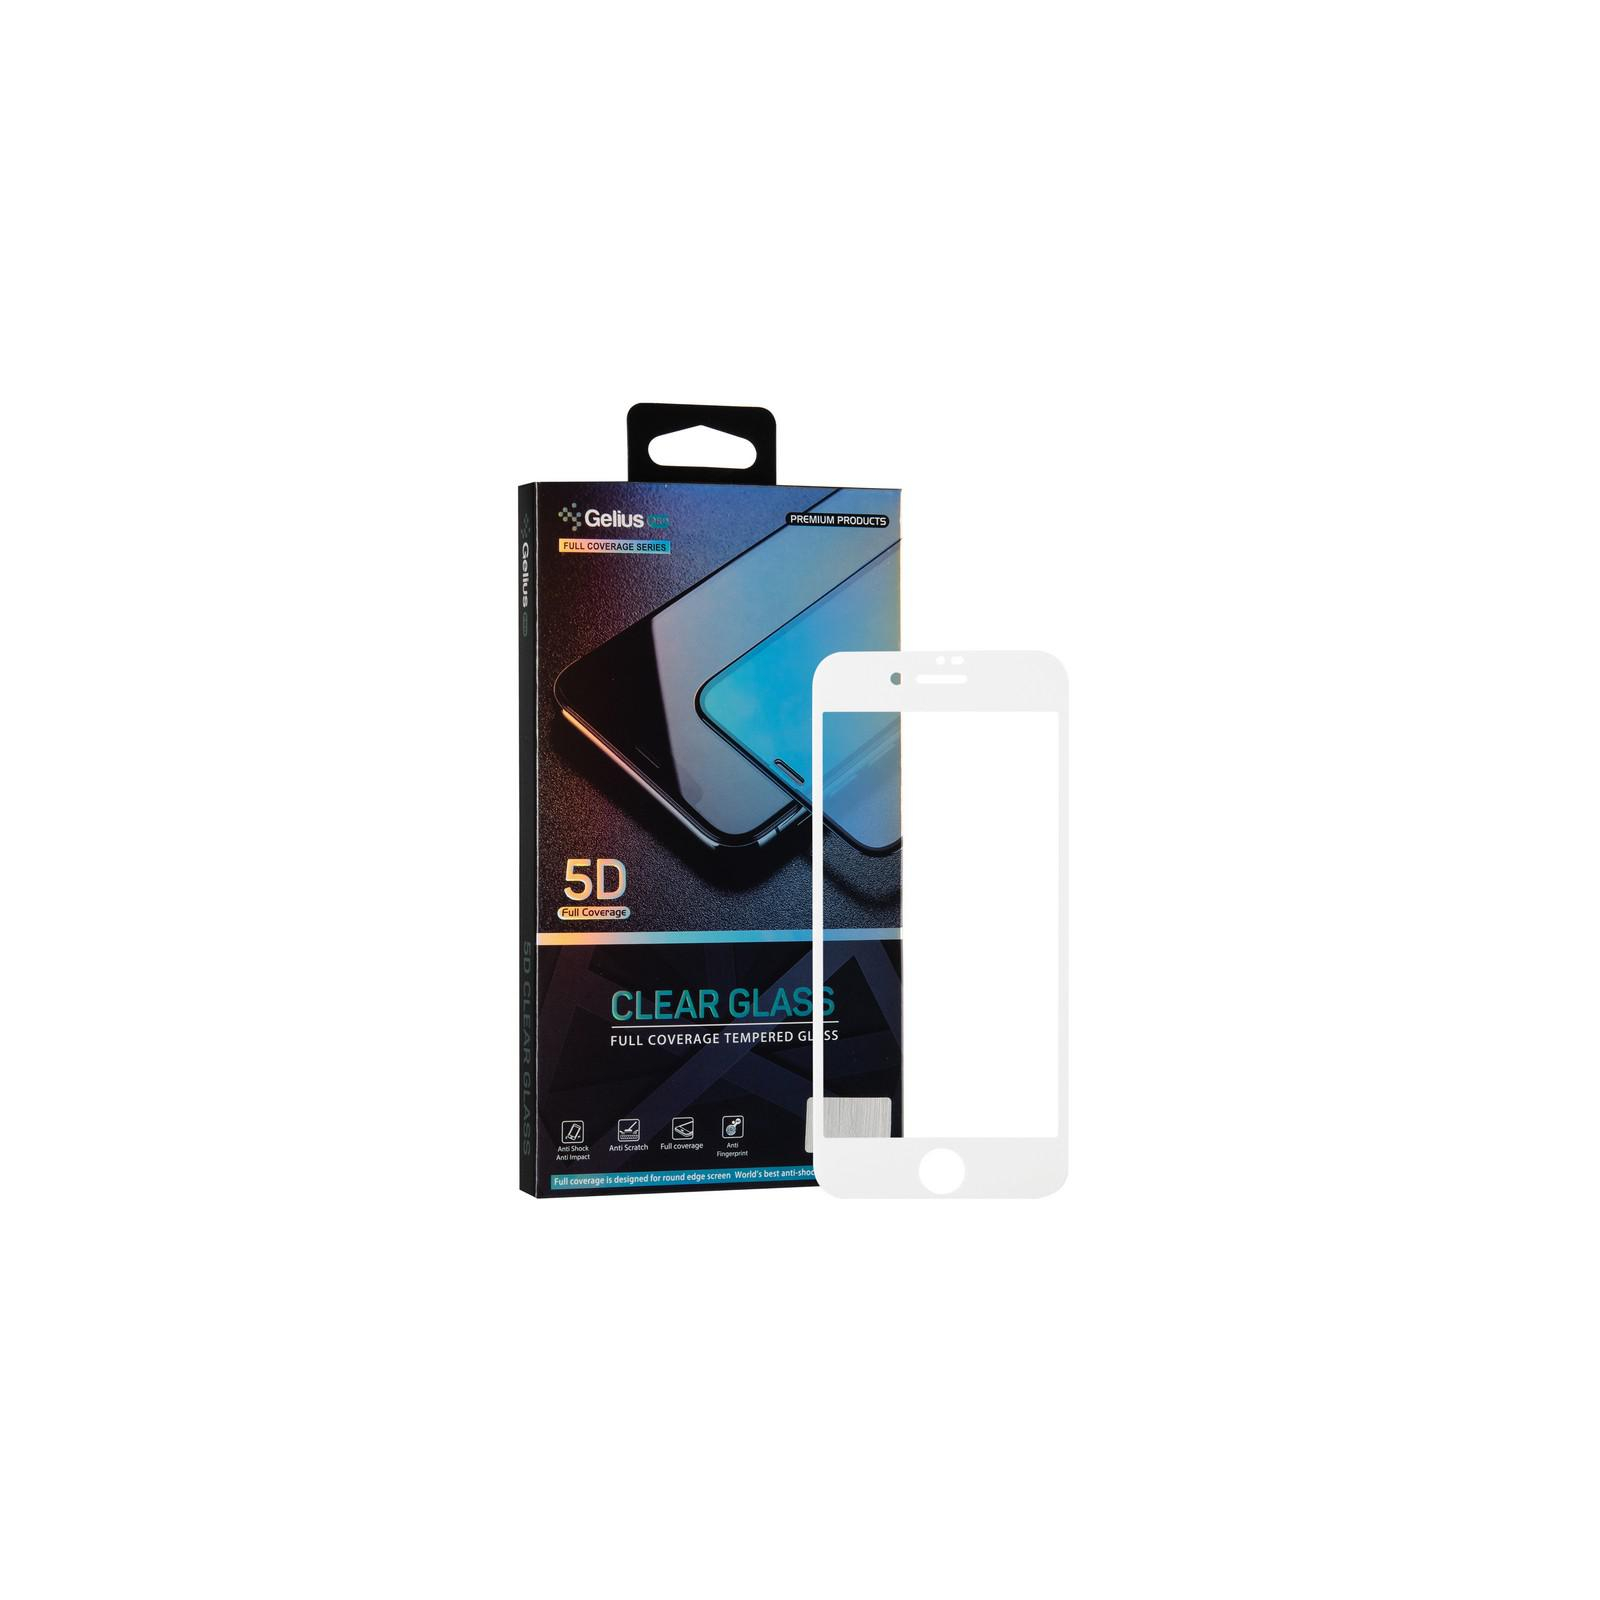 Стекло защитное Gelius Pro 5D Clear Glass for iPhone 7/8 White (00000070943) изображение 3